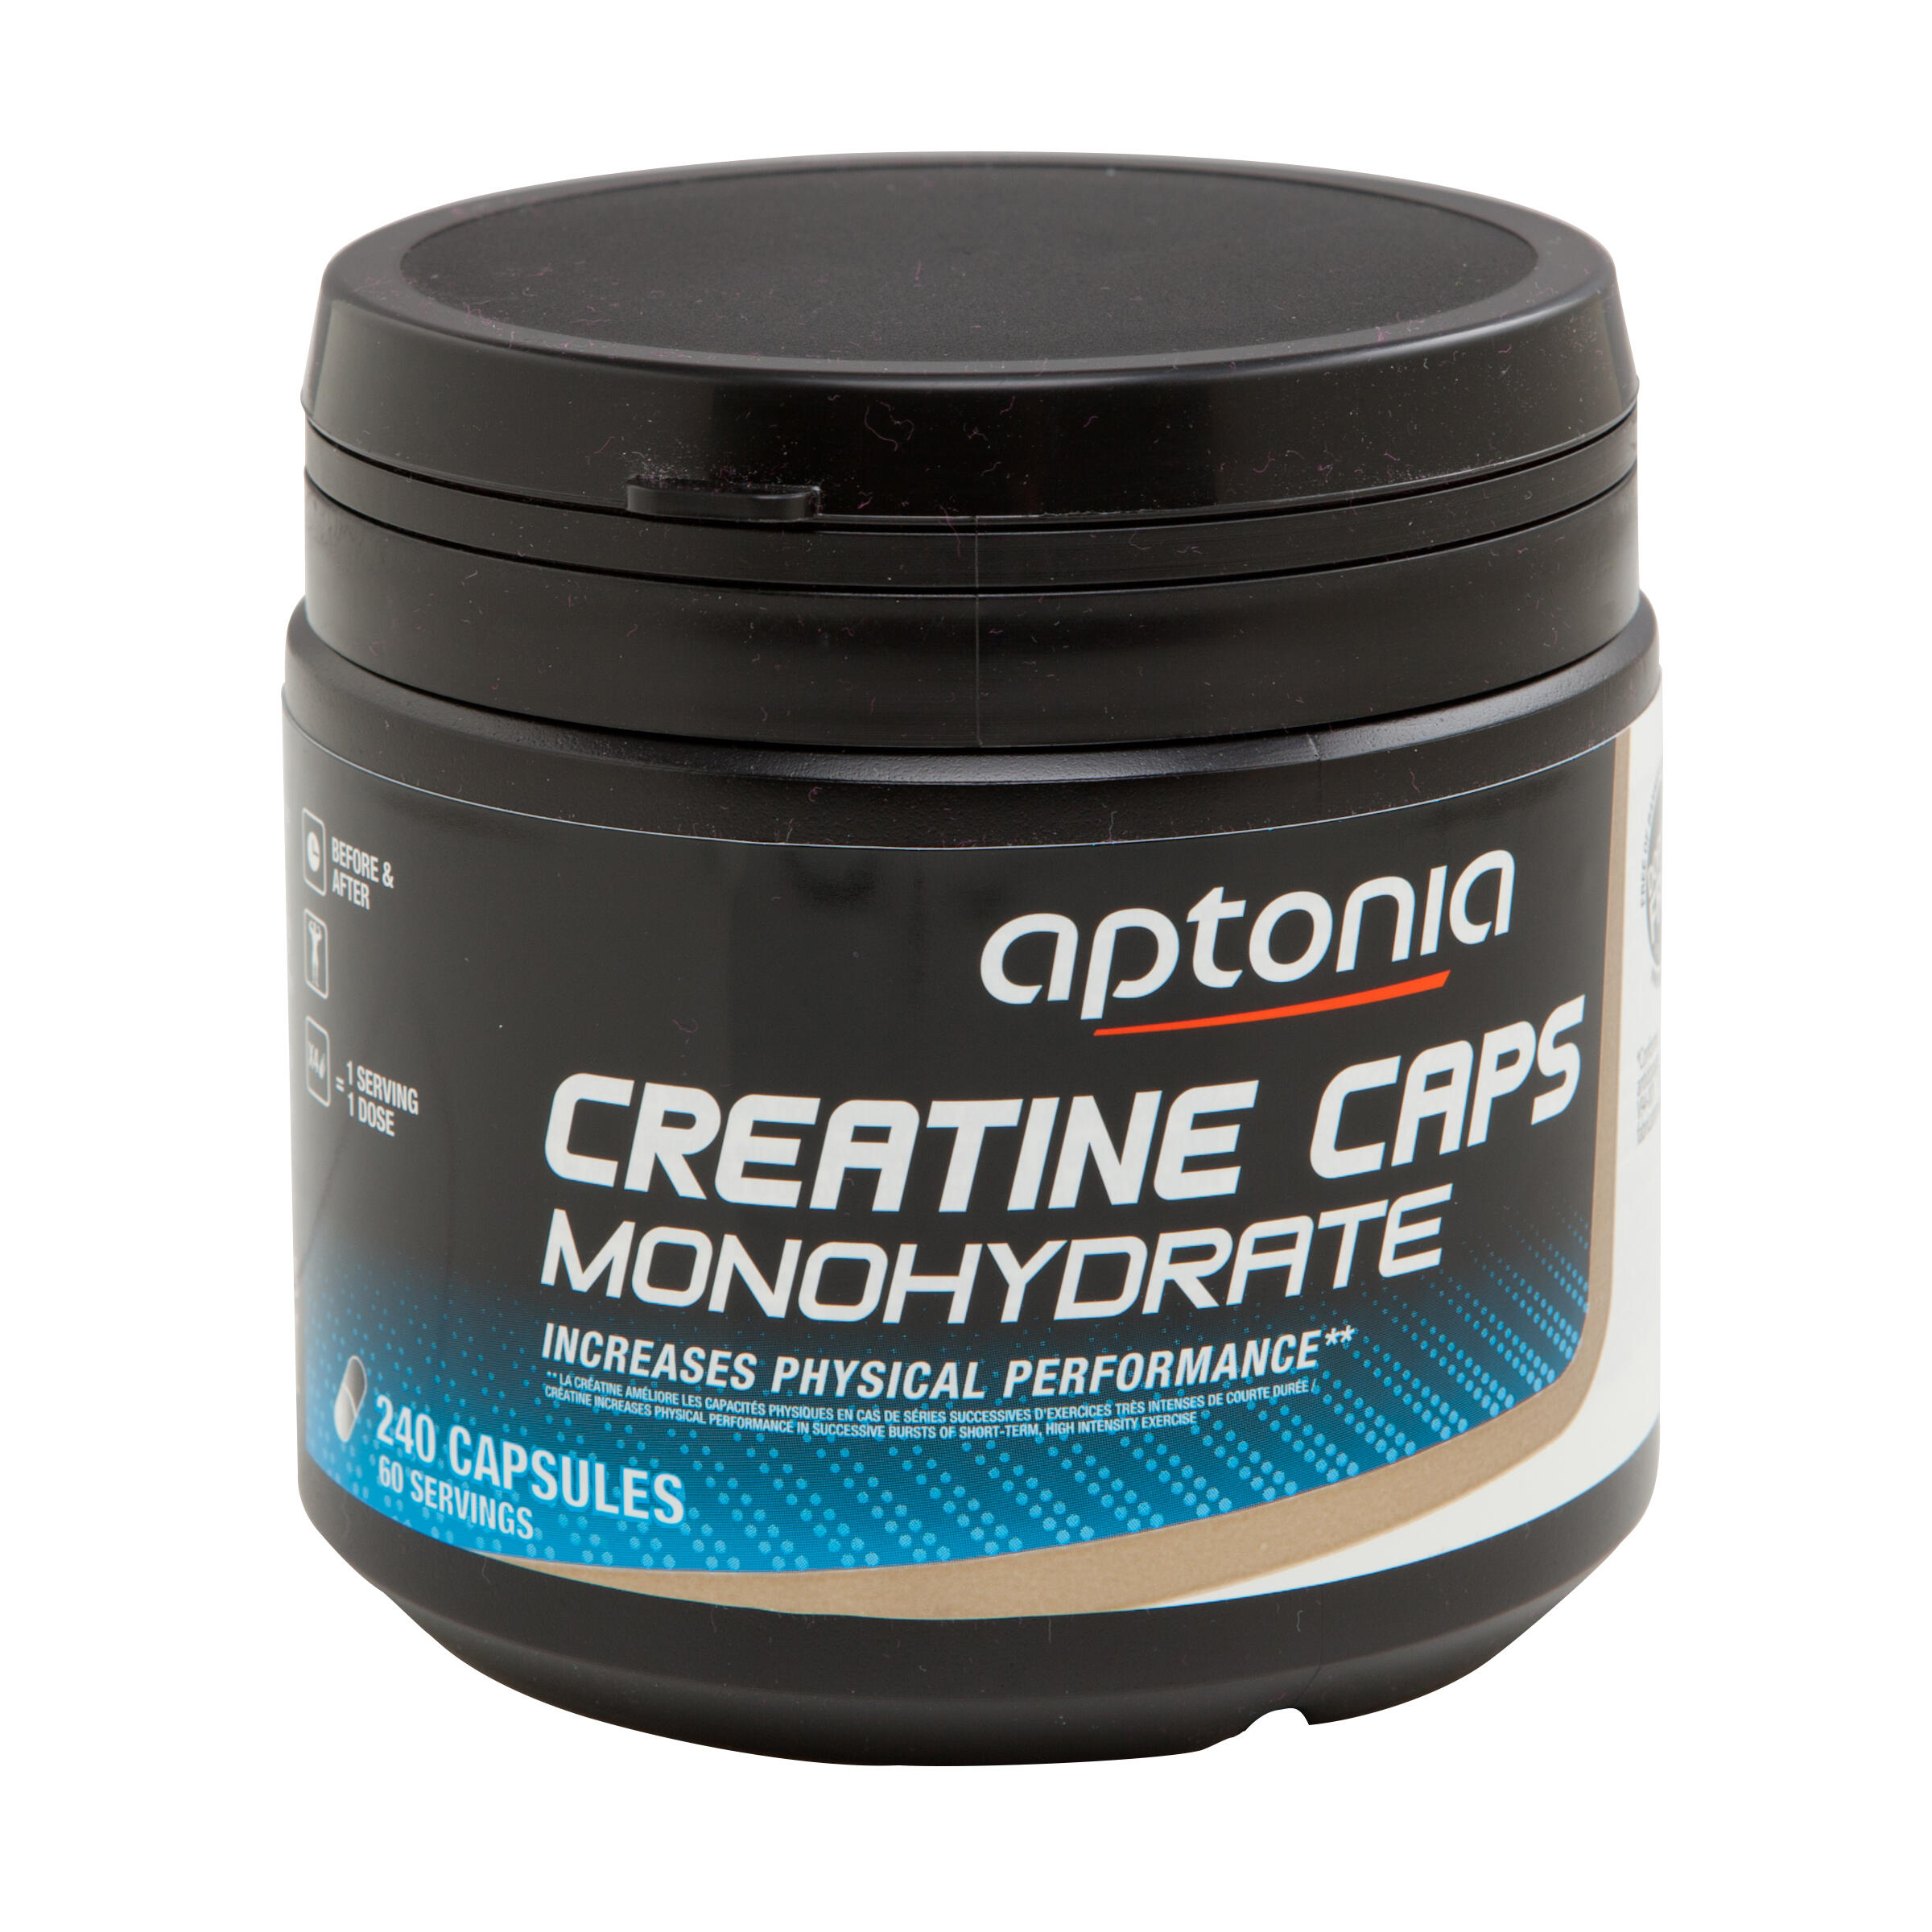 100 monohydrate creatine aptonia